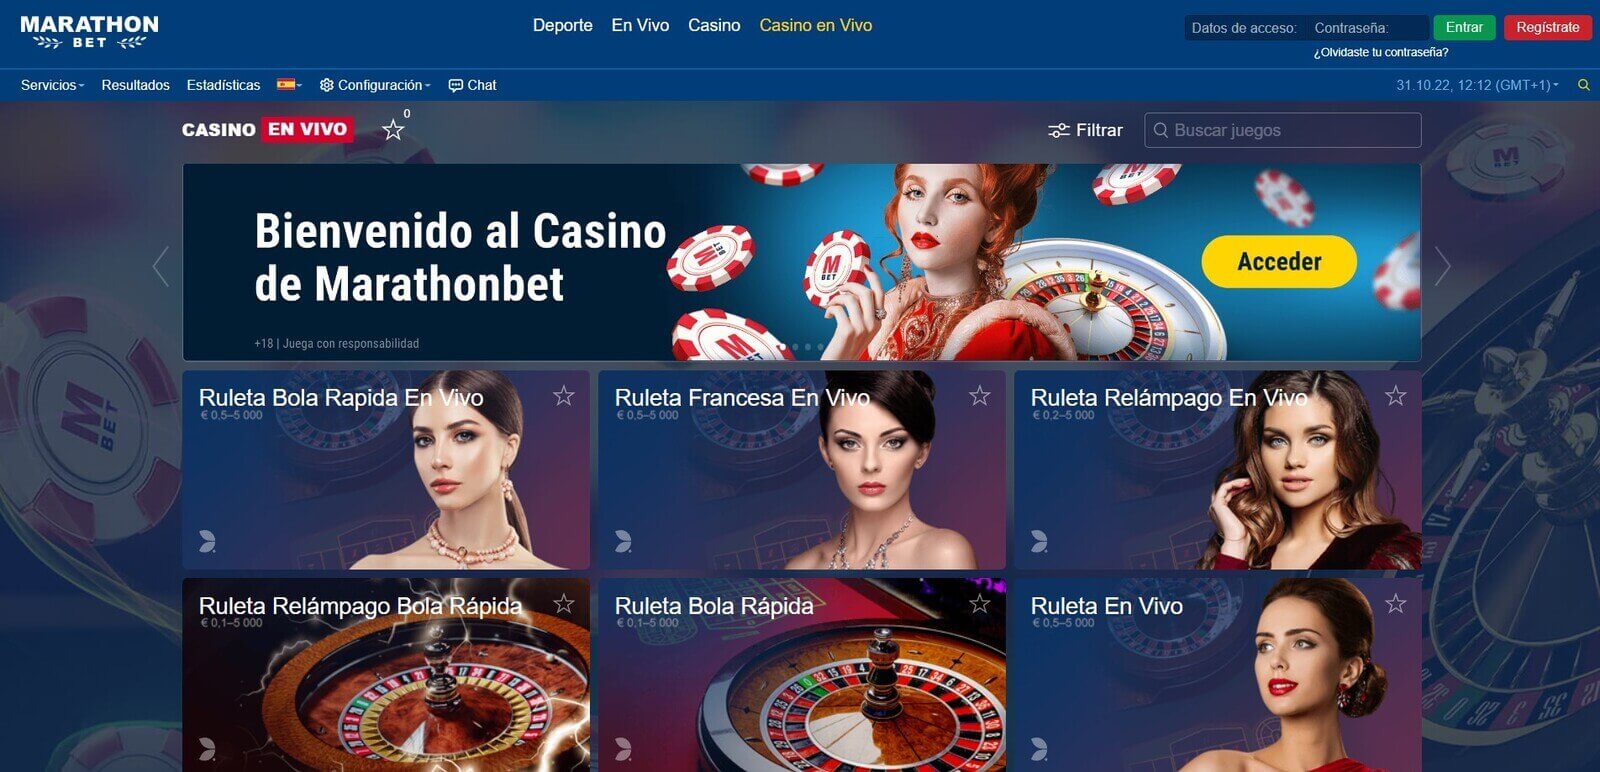 Casino en vivo de MarathonBet online en España